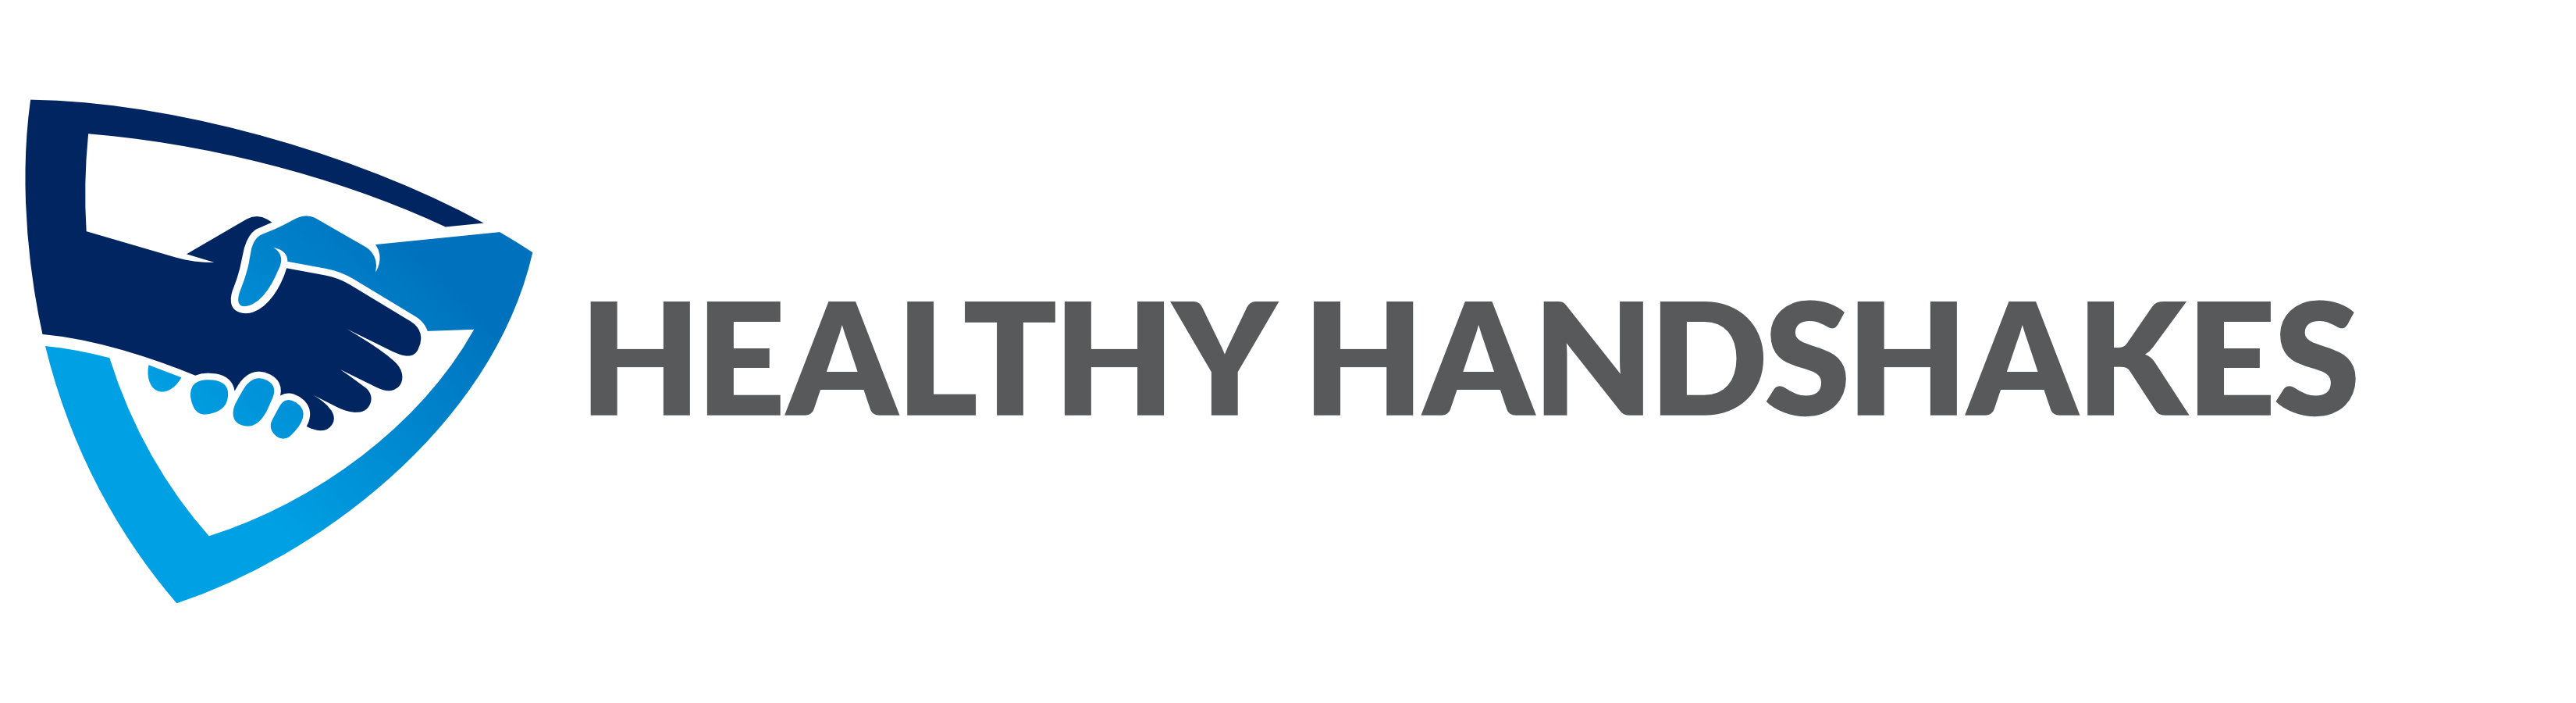 Healthy Handshakes